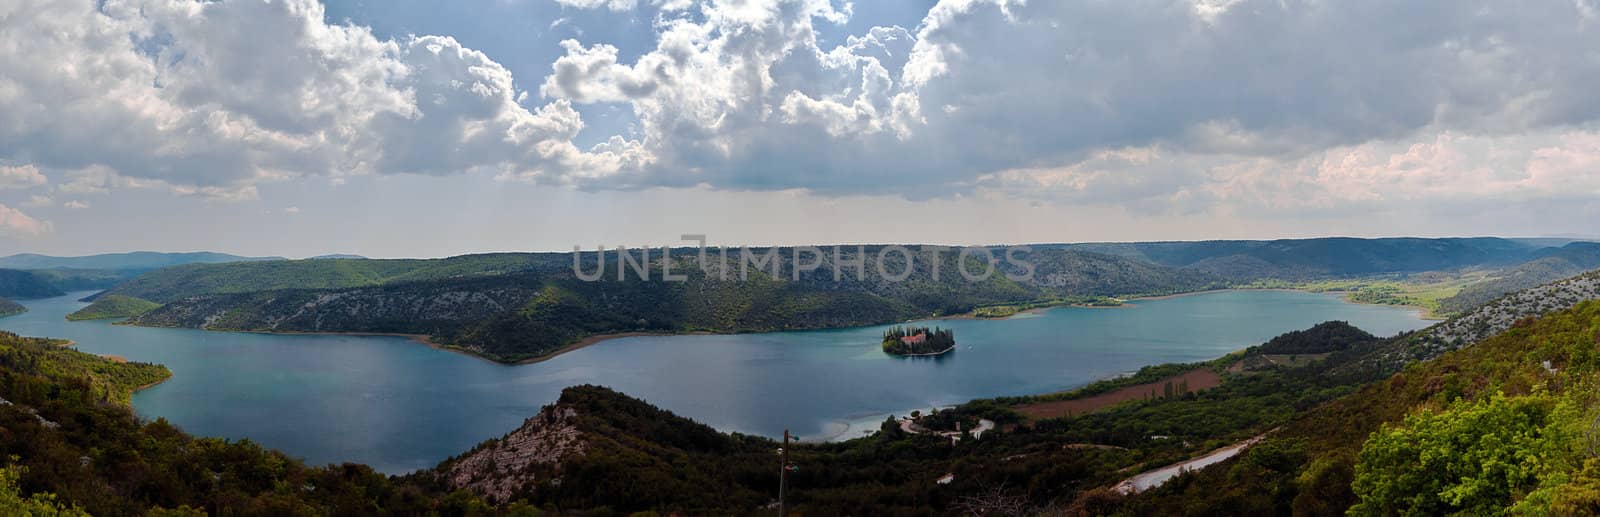 Panoramic HDR photo of the Krka river and Visovac monastery, Croatia.